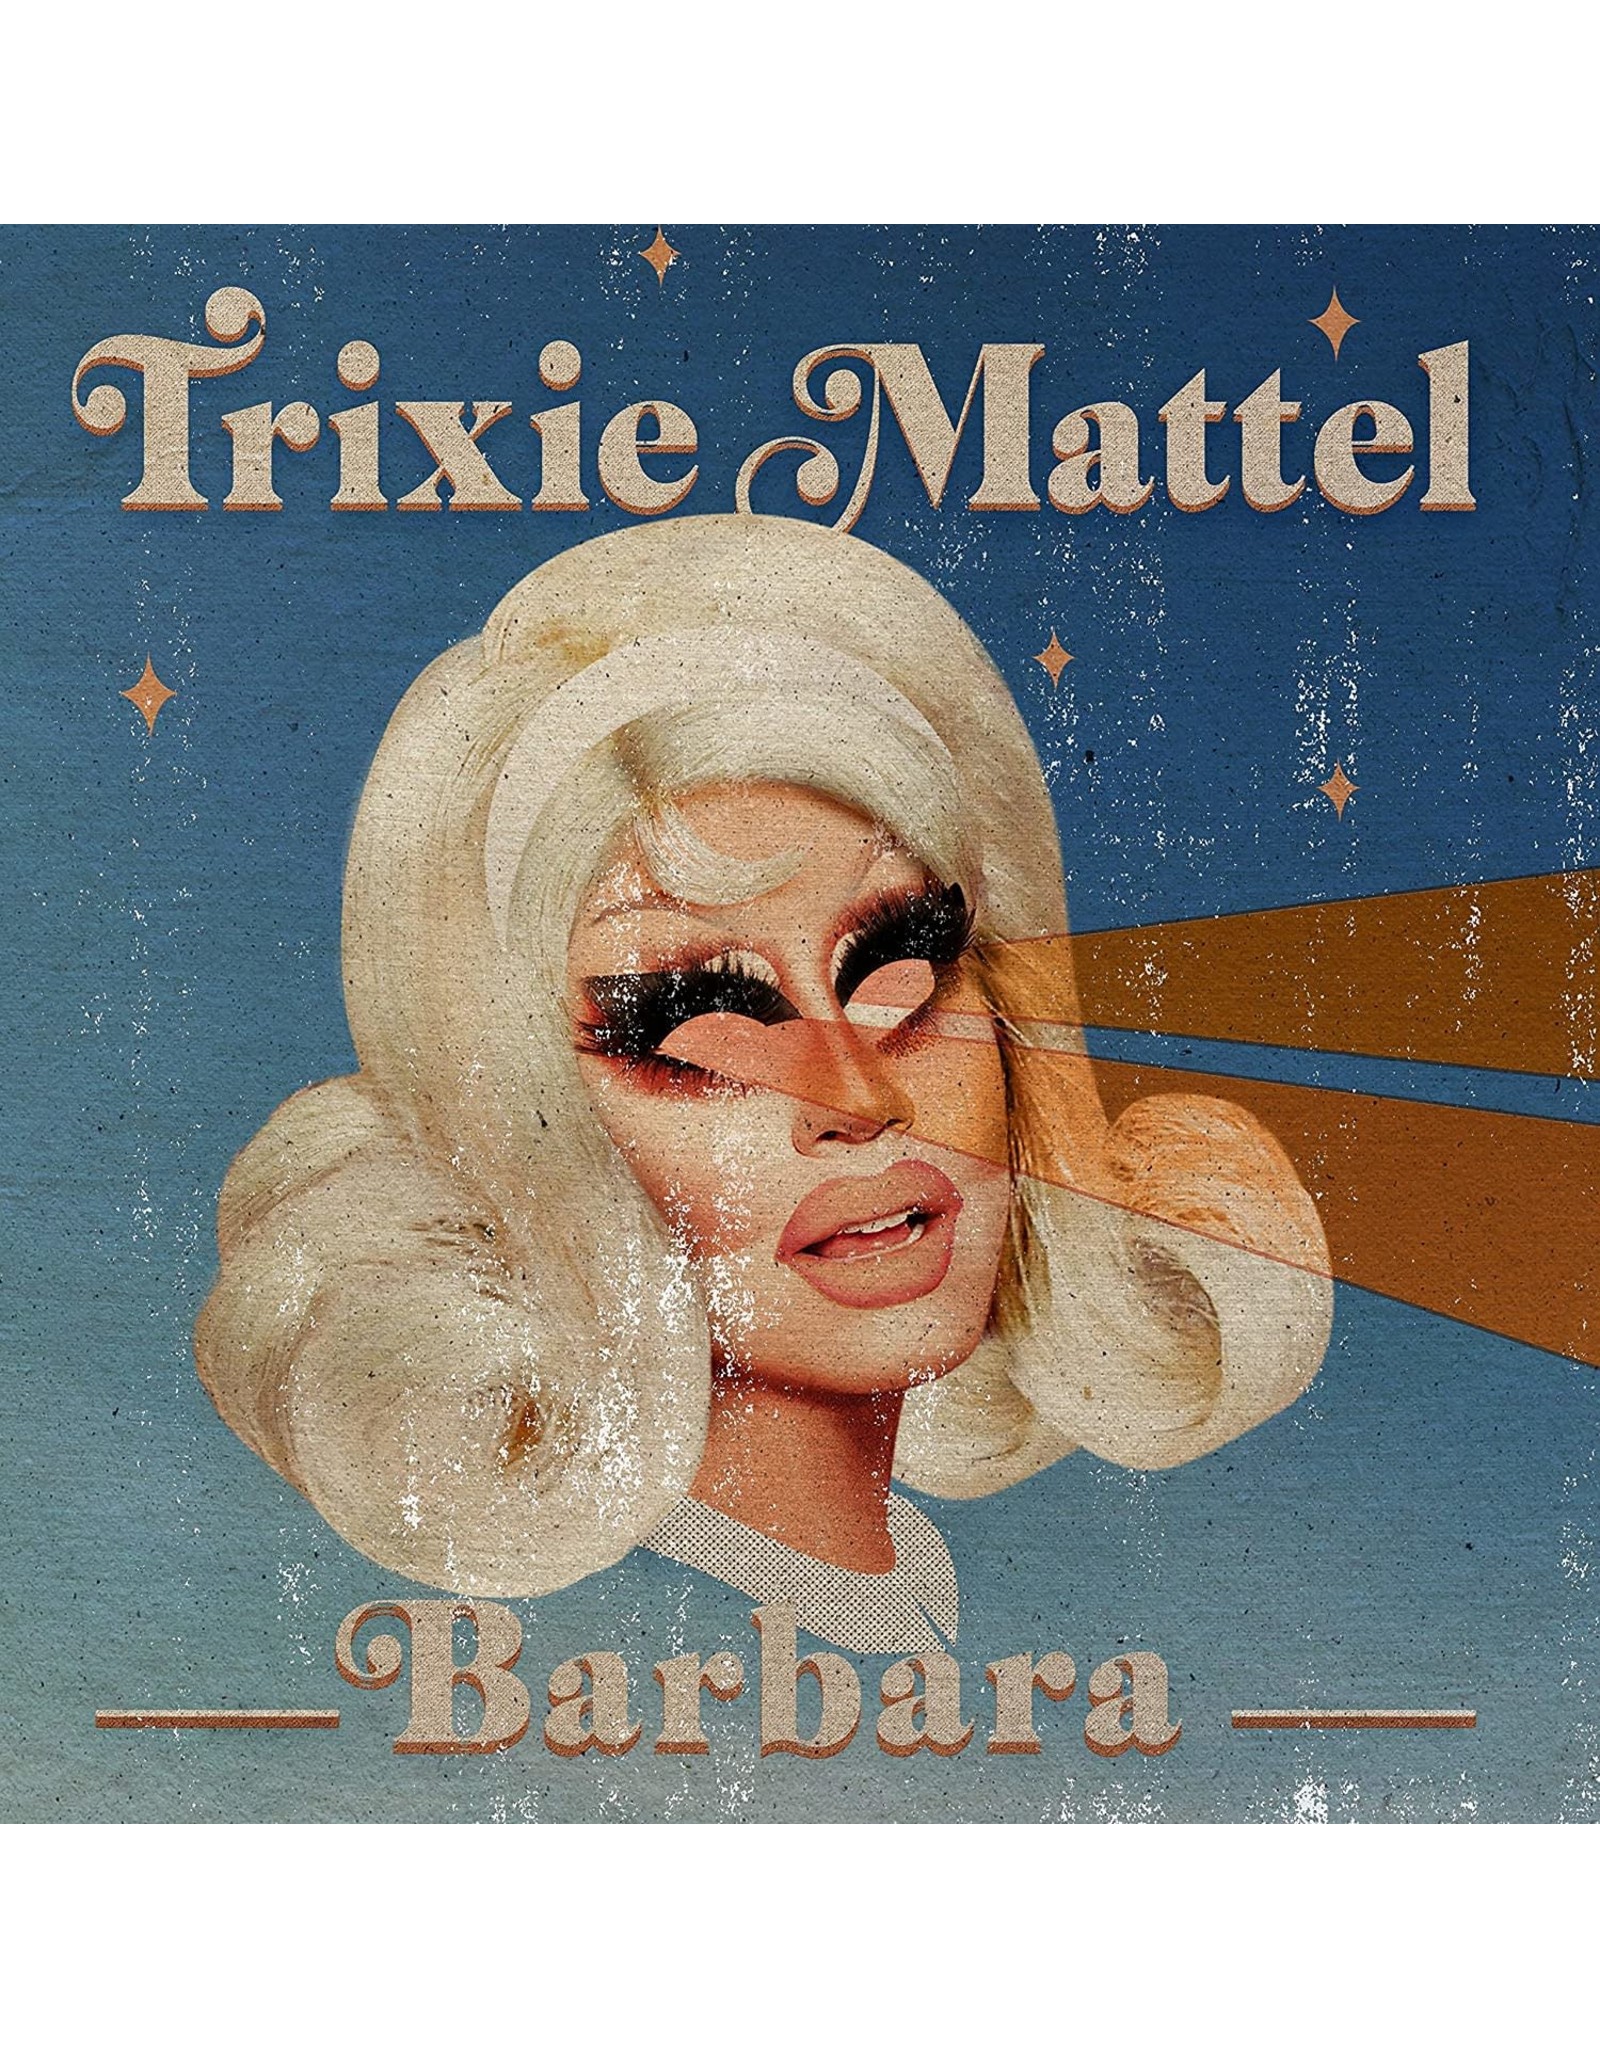 Trixie Mattel - Barbara (Yellow Vinyl)